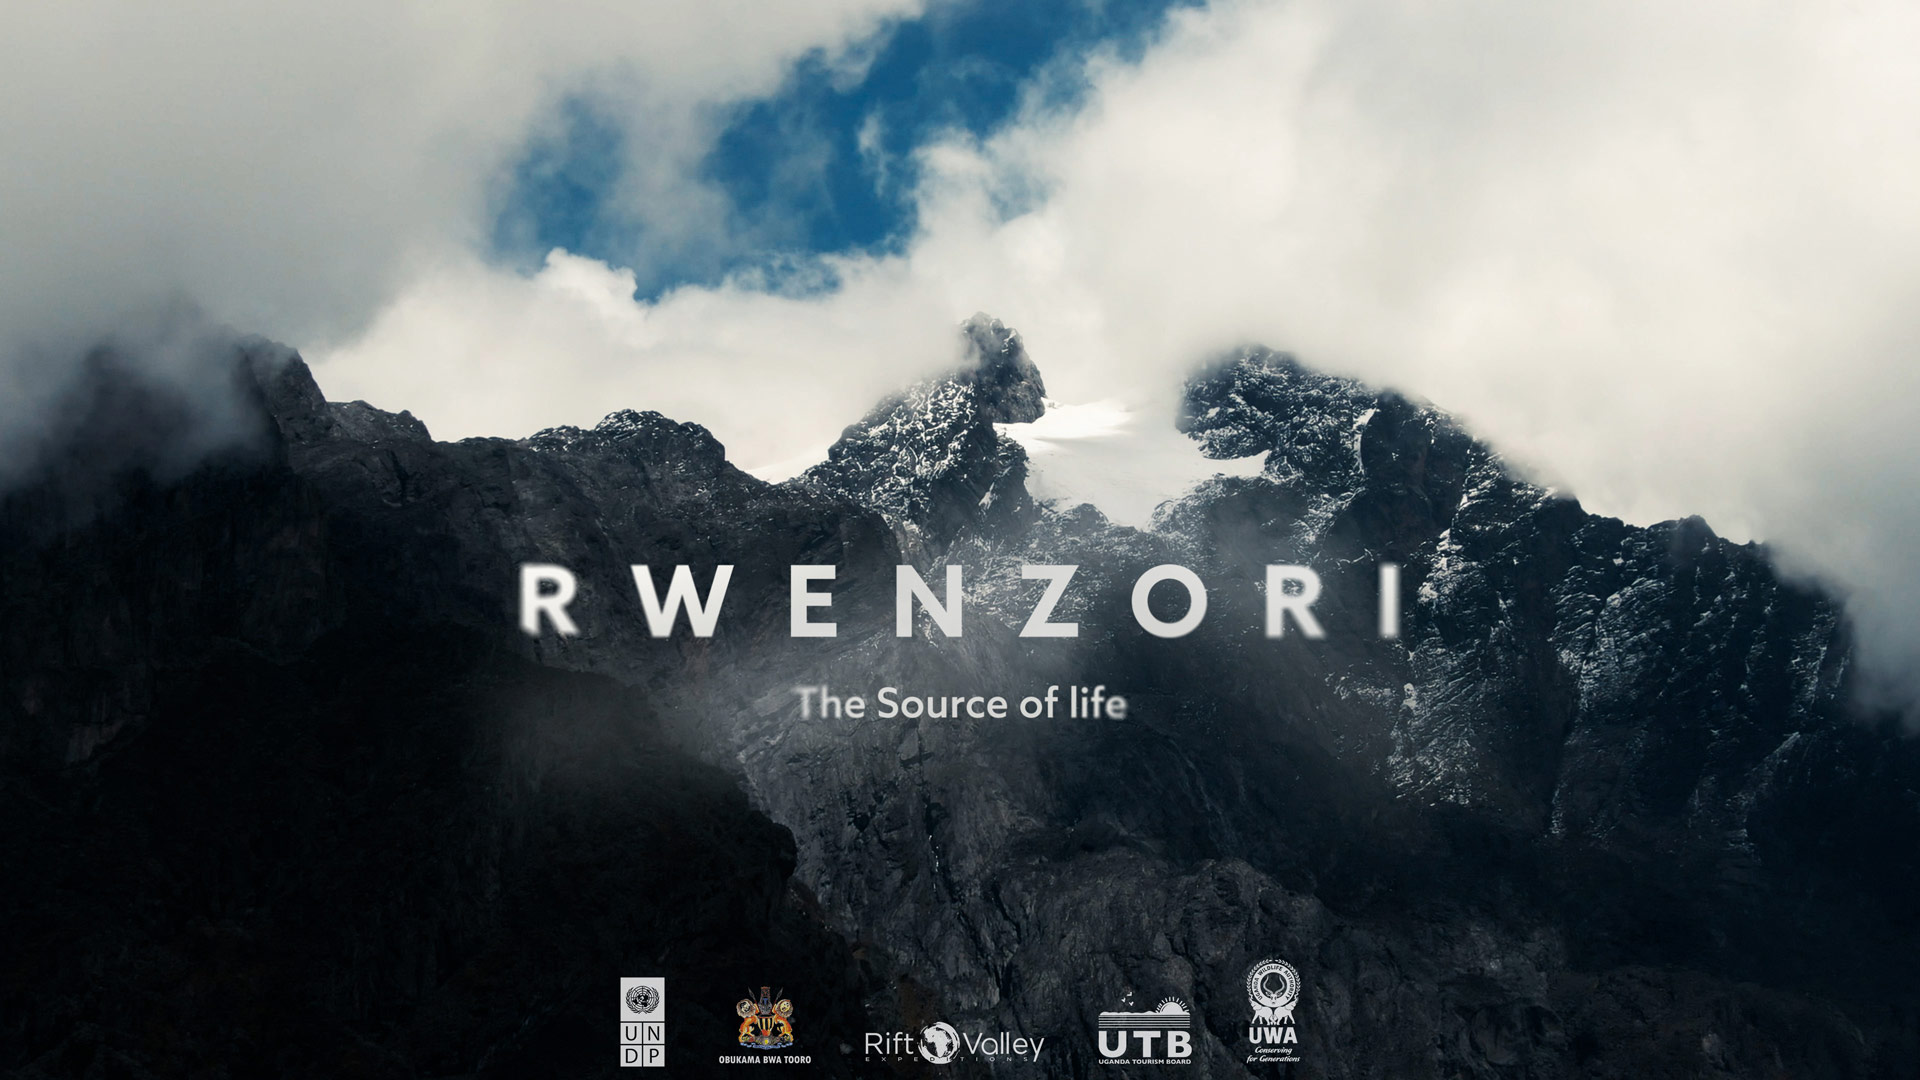 RWENZORI THE SOURCE OF LIFE